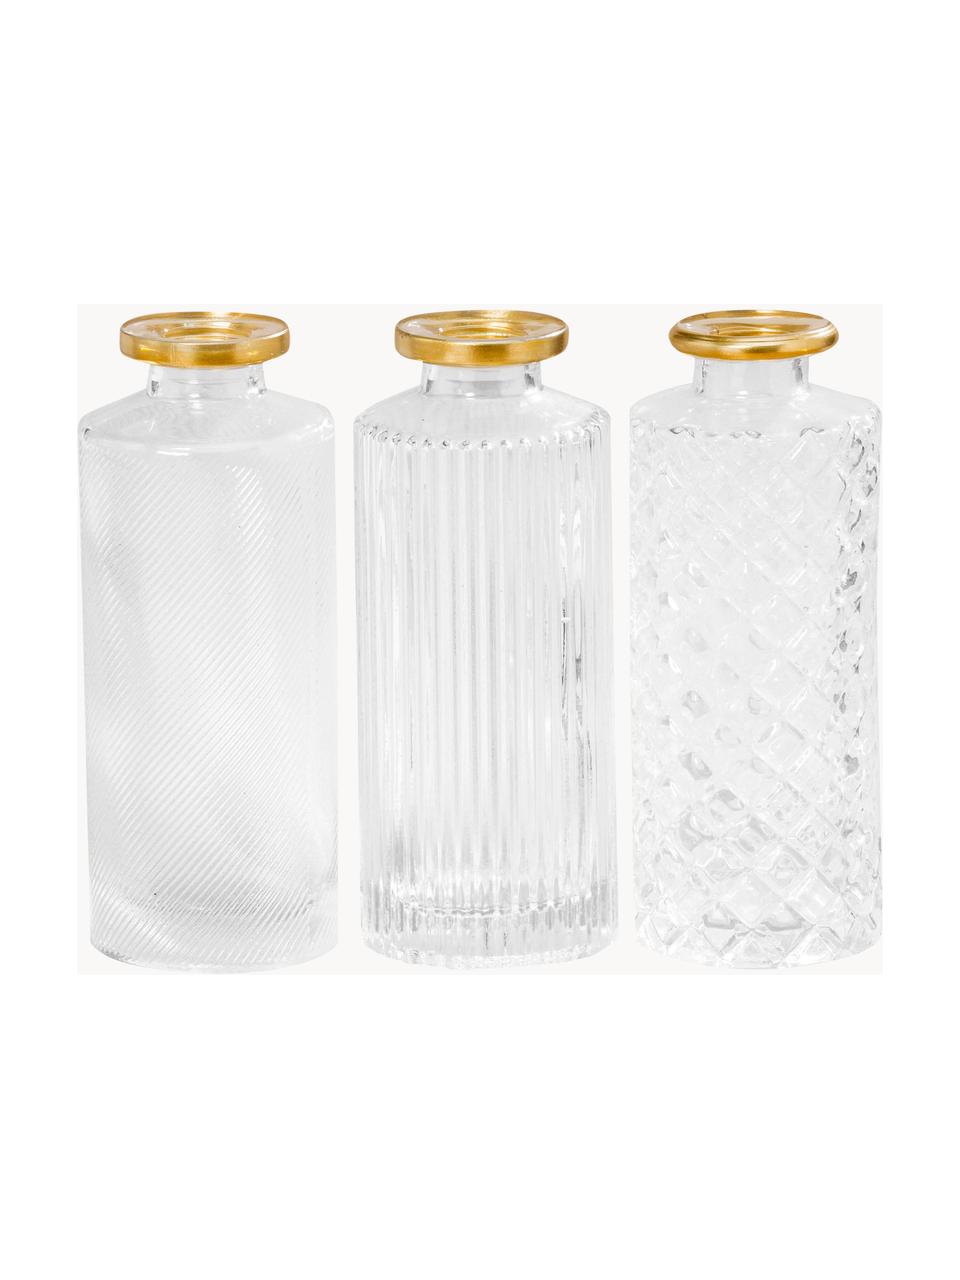 Set de jarrones pequeños Adore, 3 uds., Transparente, dorado, Ø 5 x Al 13 cm